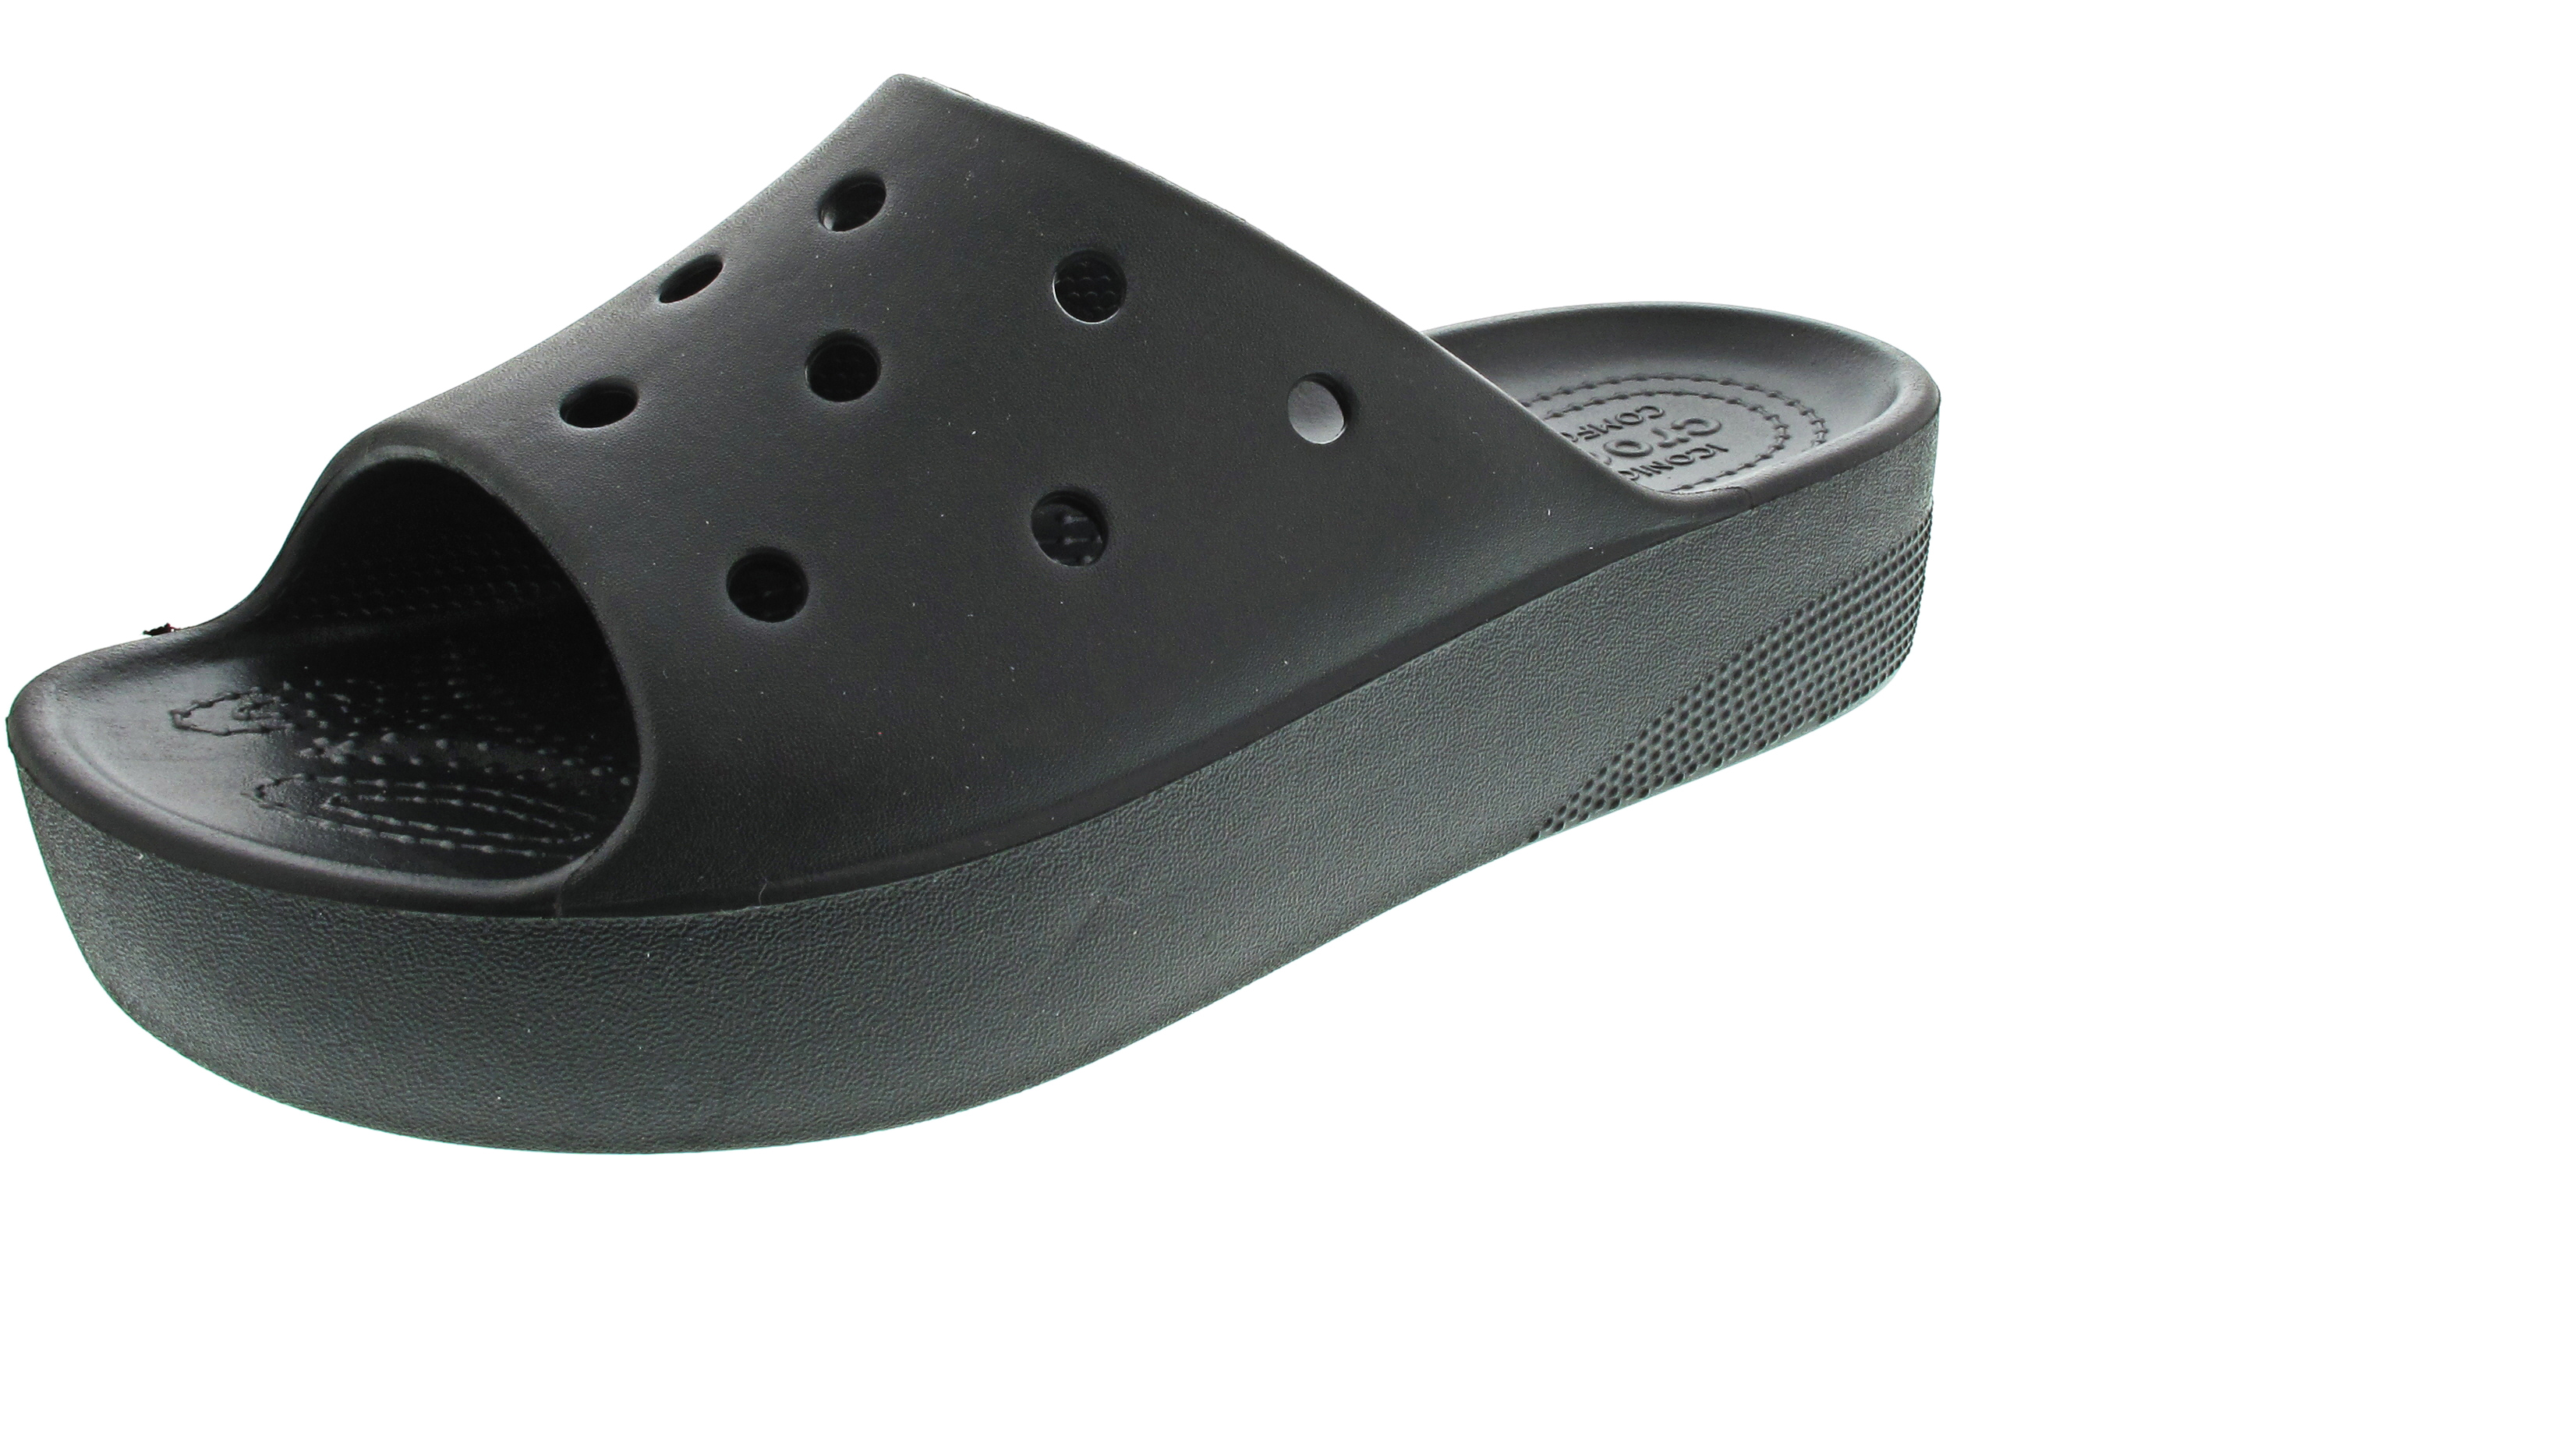 Crocs Classic Platform Slide